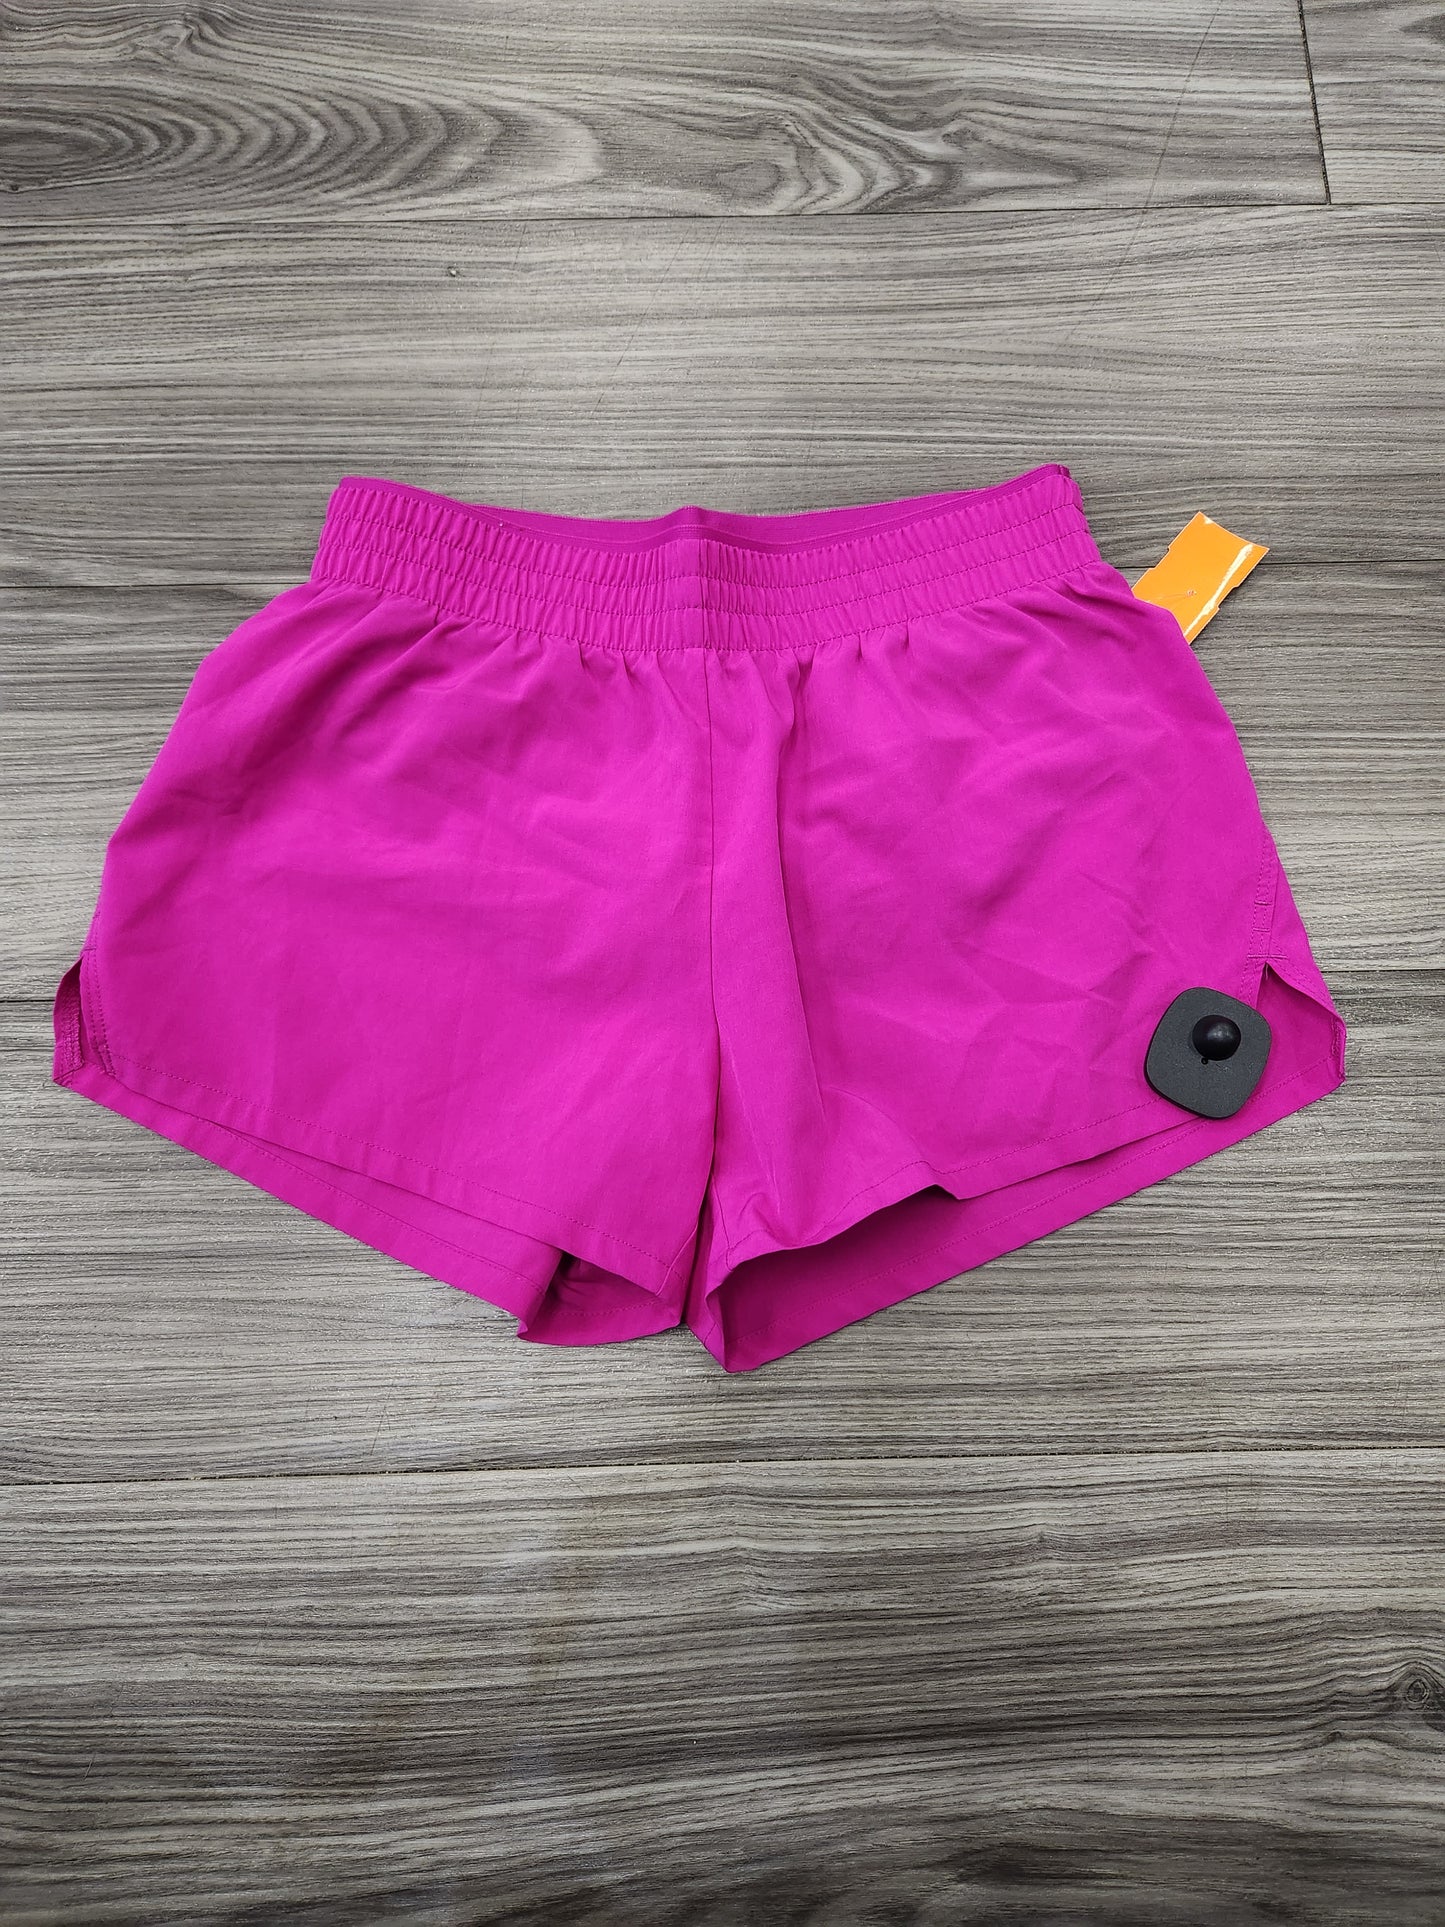 Athletic Shorts By Gapfit  Size: Xs